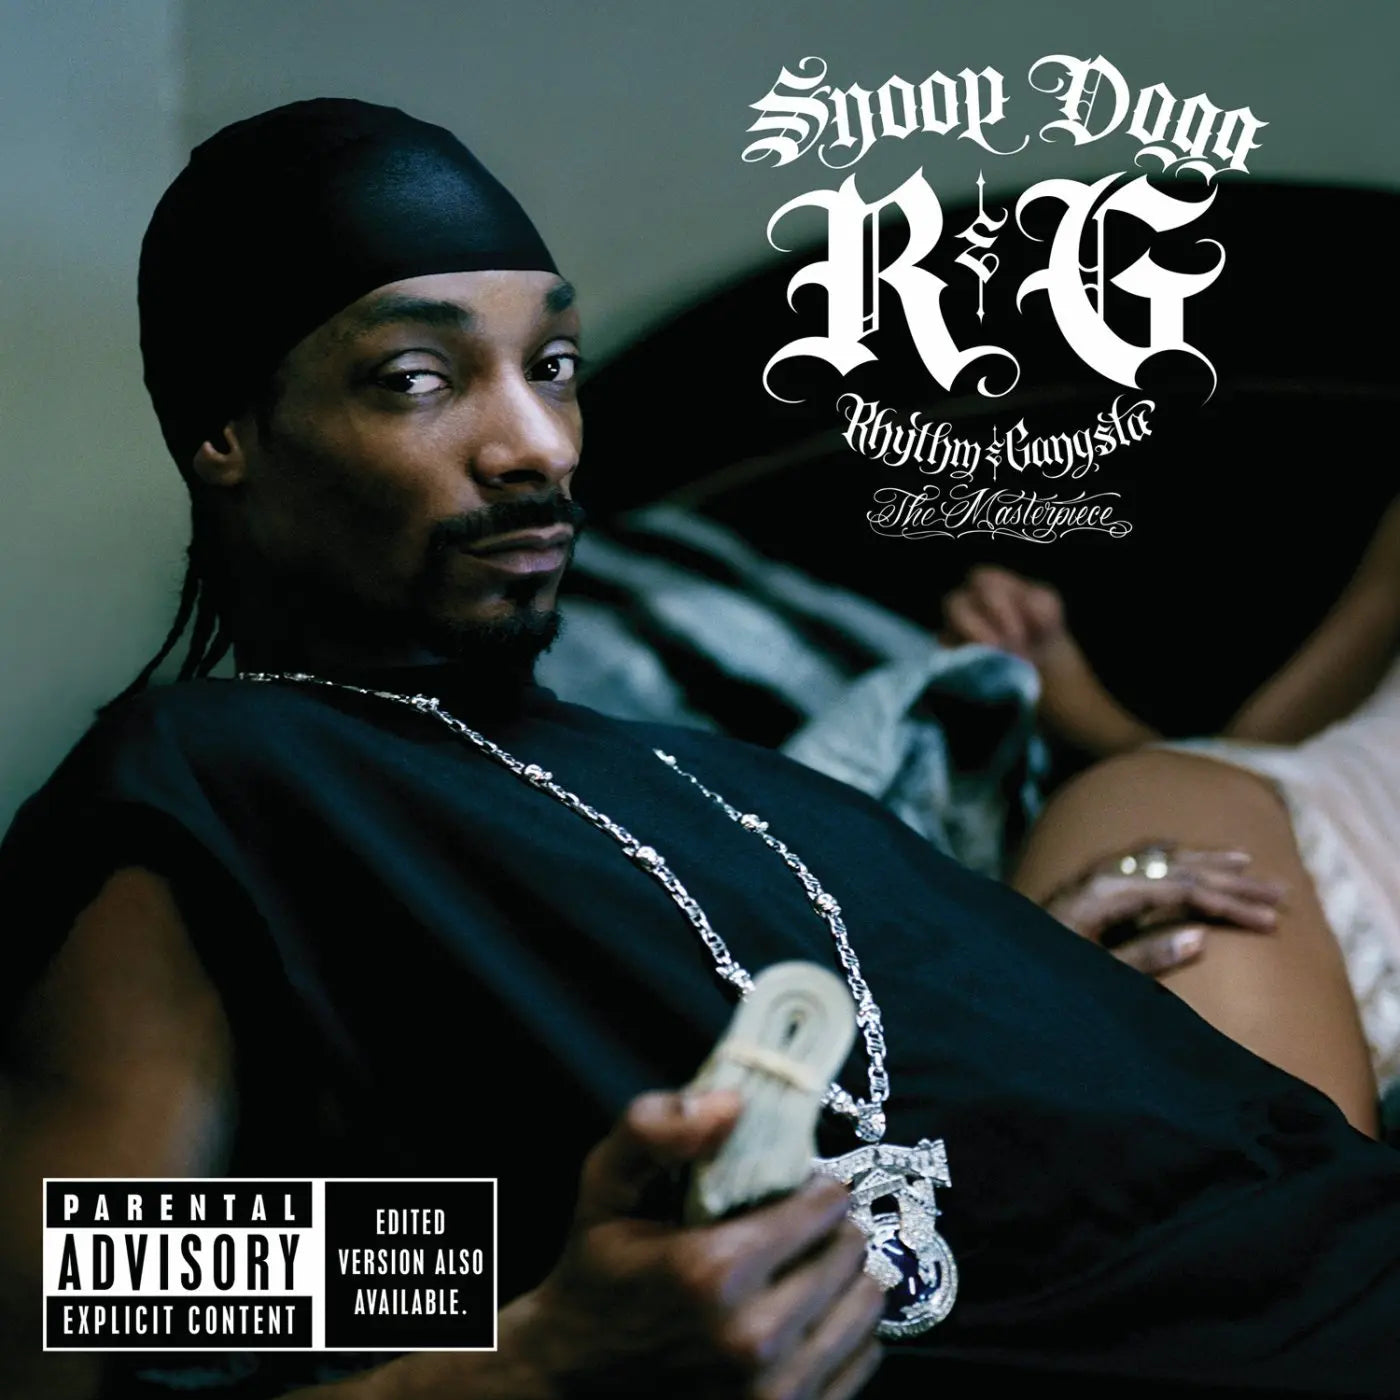 Snoop Dogg - R&G (Rhythm & Gangsta): The Masterpiece [Explicit Content] [Vinyl LP]